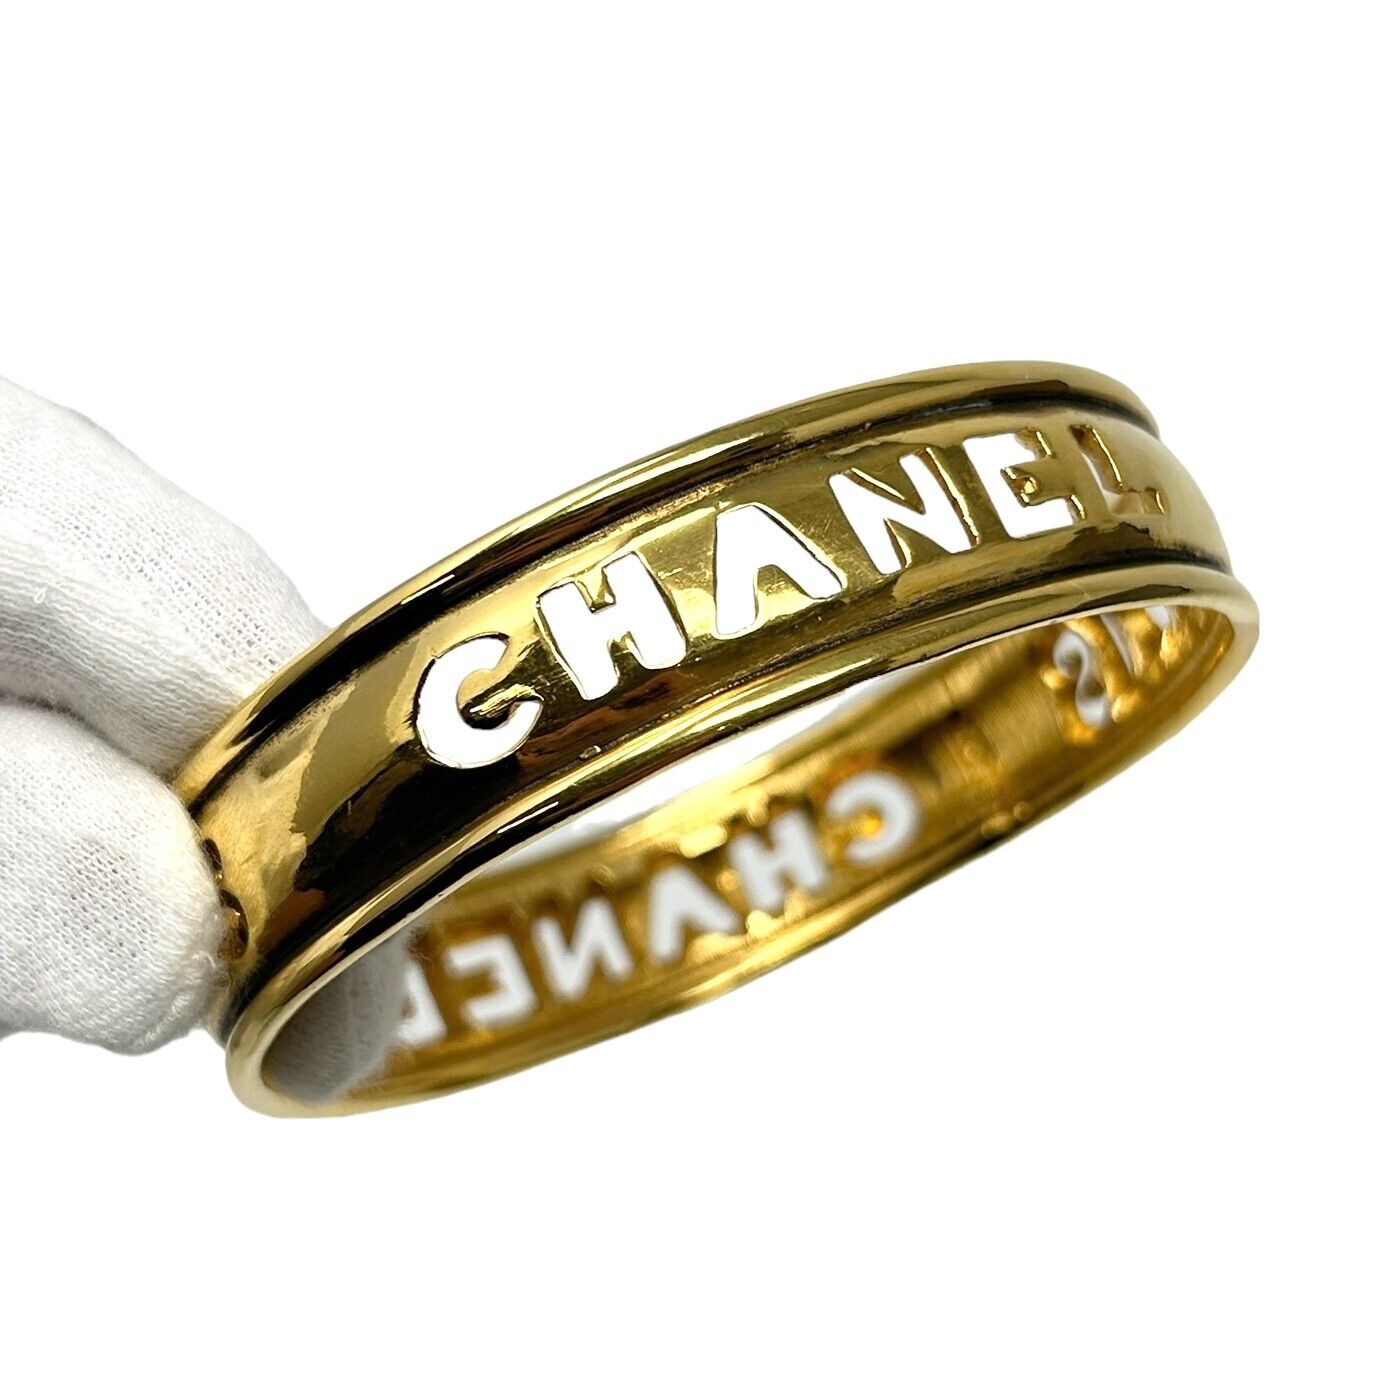 CHANEL Vintage Coco Mark Bangle Jewelry Accessory Gold Metal Bracelet RankAB